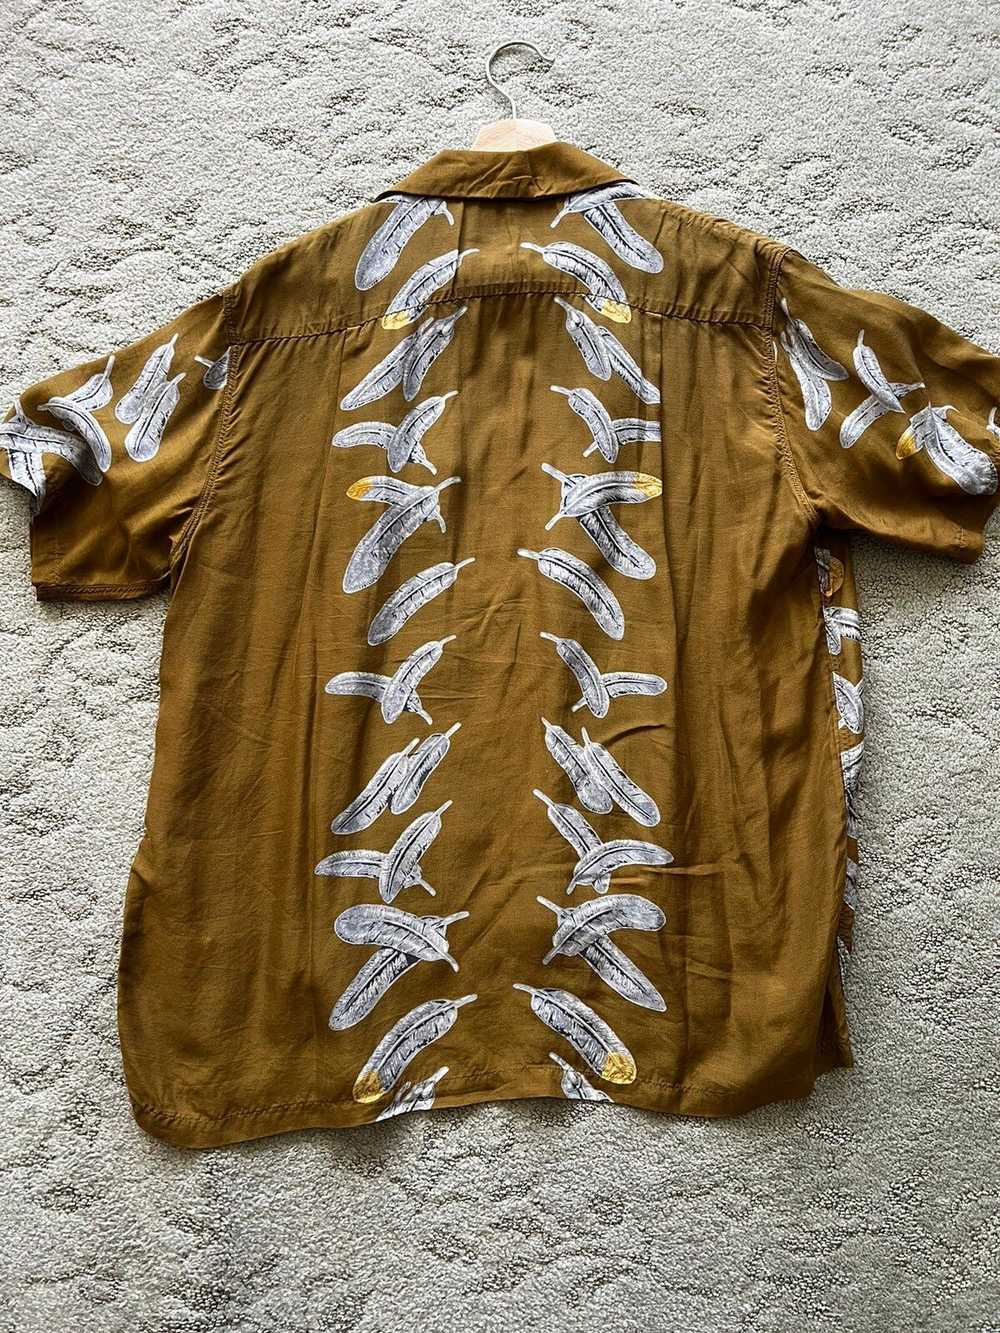 Kapital Feather & Eagle motif bowling shirt - image 2